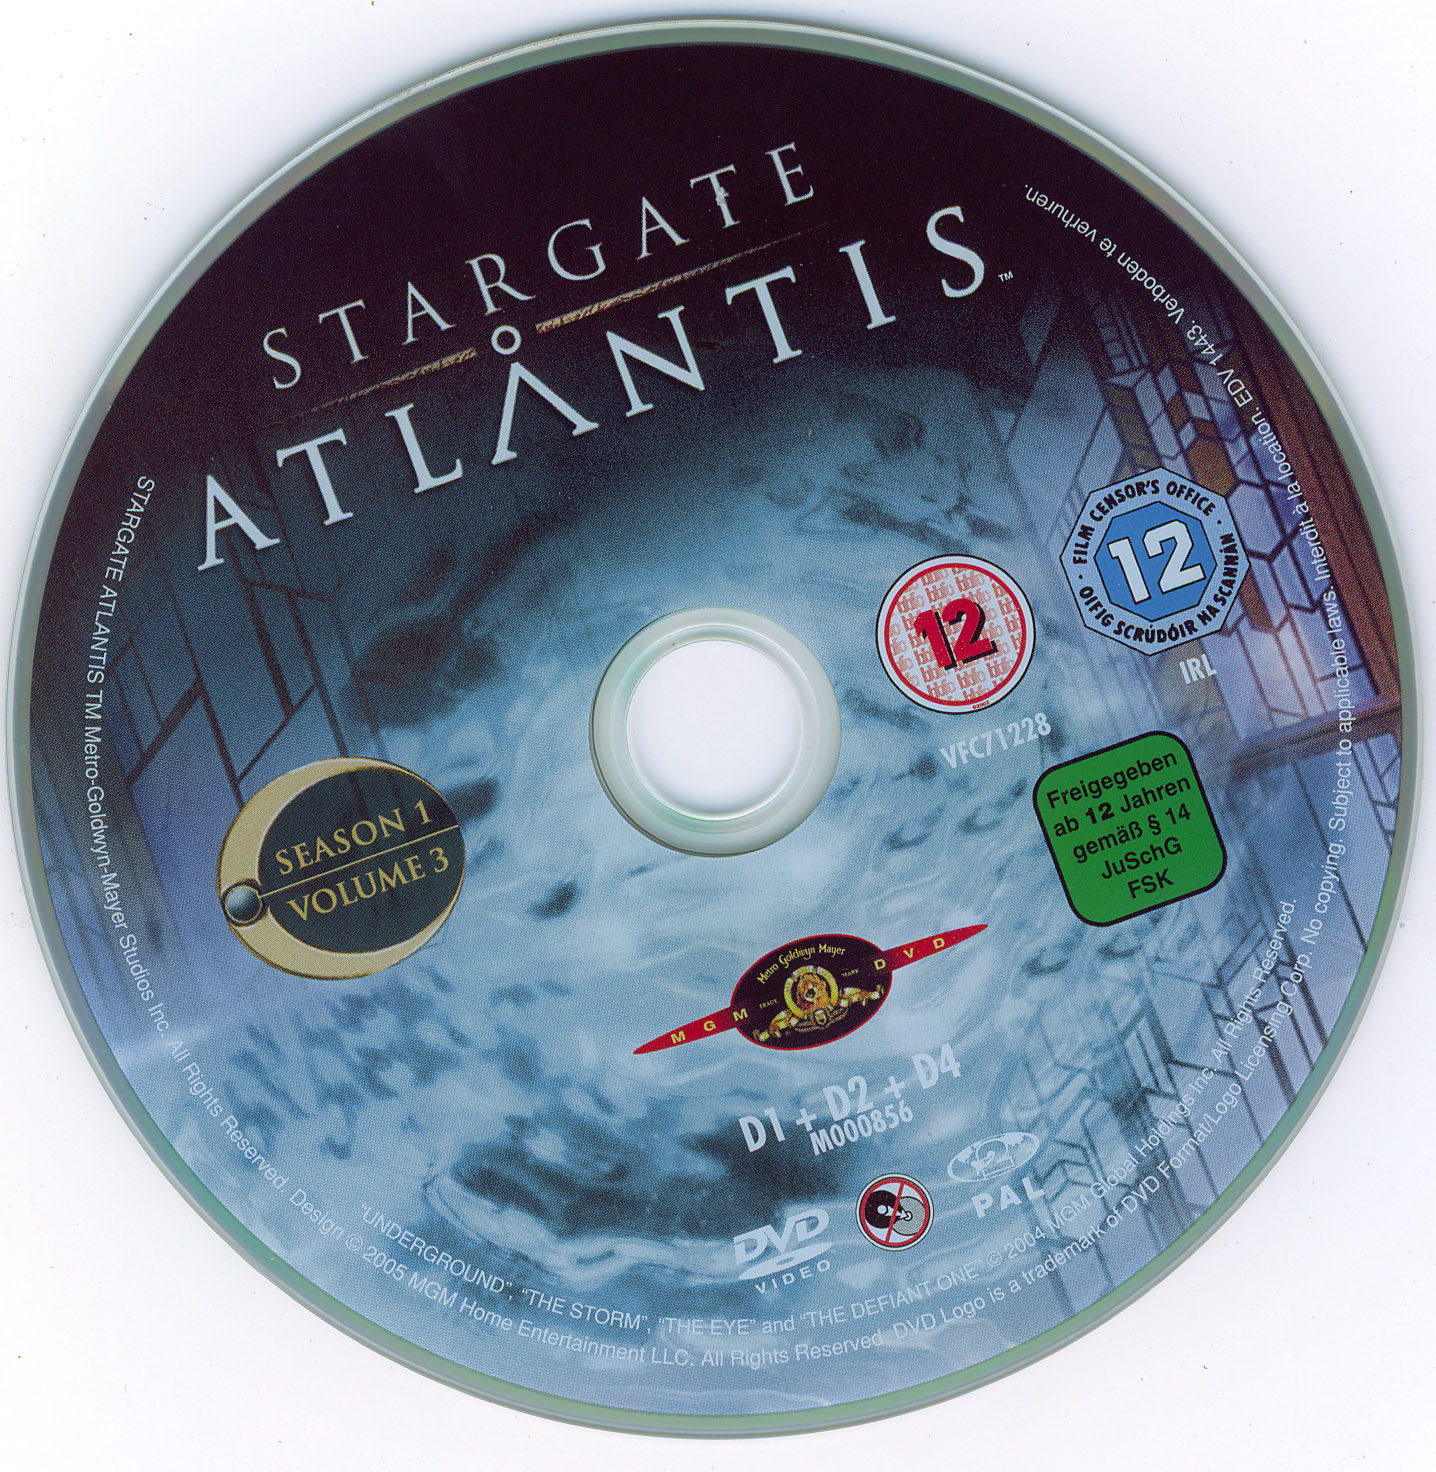 Stargate Atlantis saison 1 vol 3